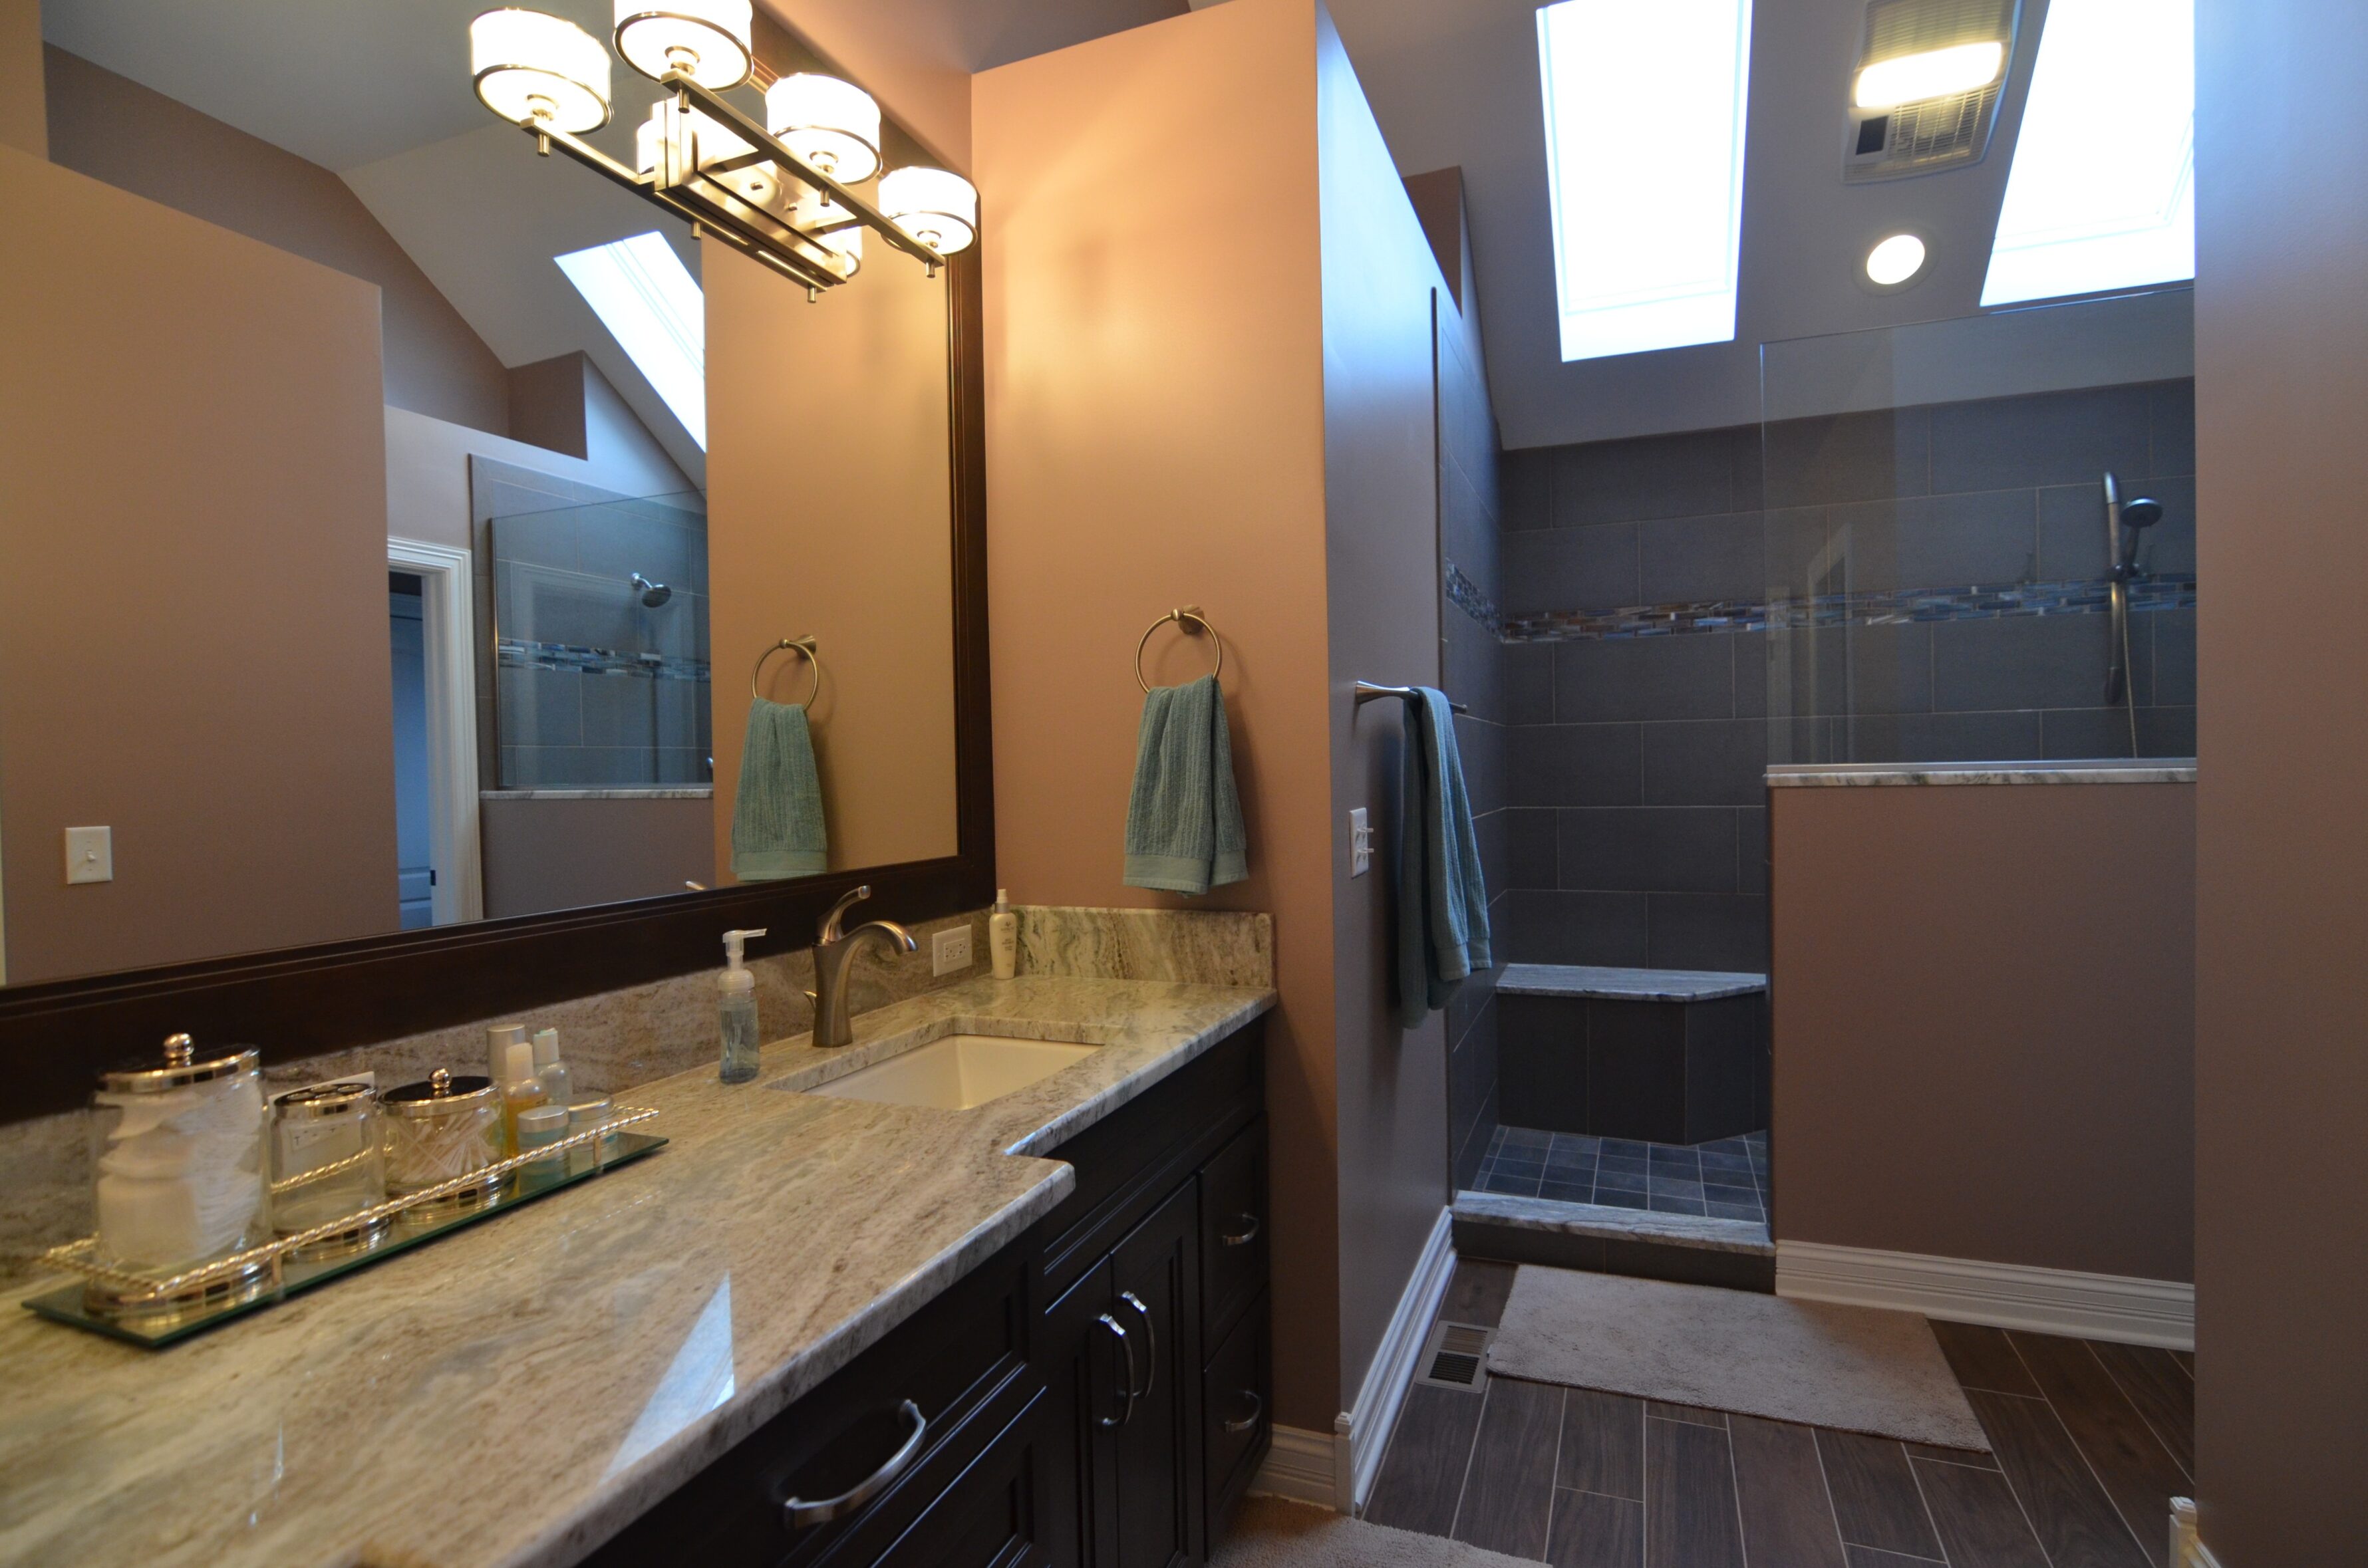 Bathroom remodeling in Naperville, IL. New wood tile bathroom flooring for warm tones.